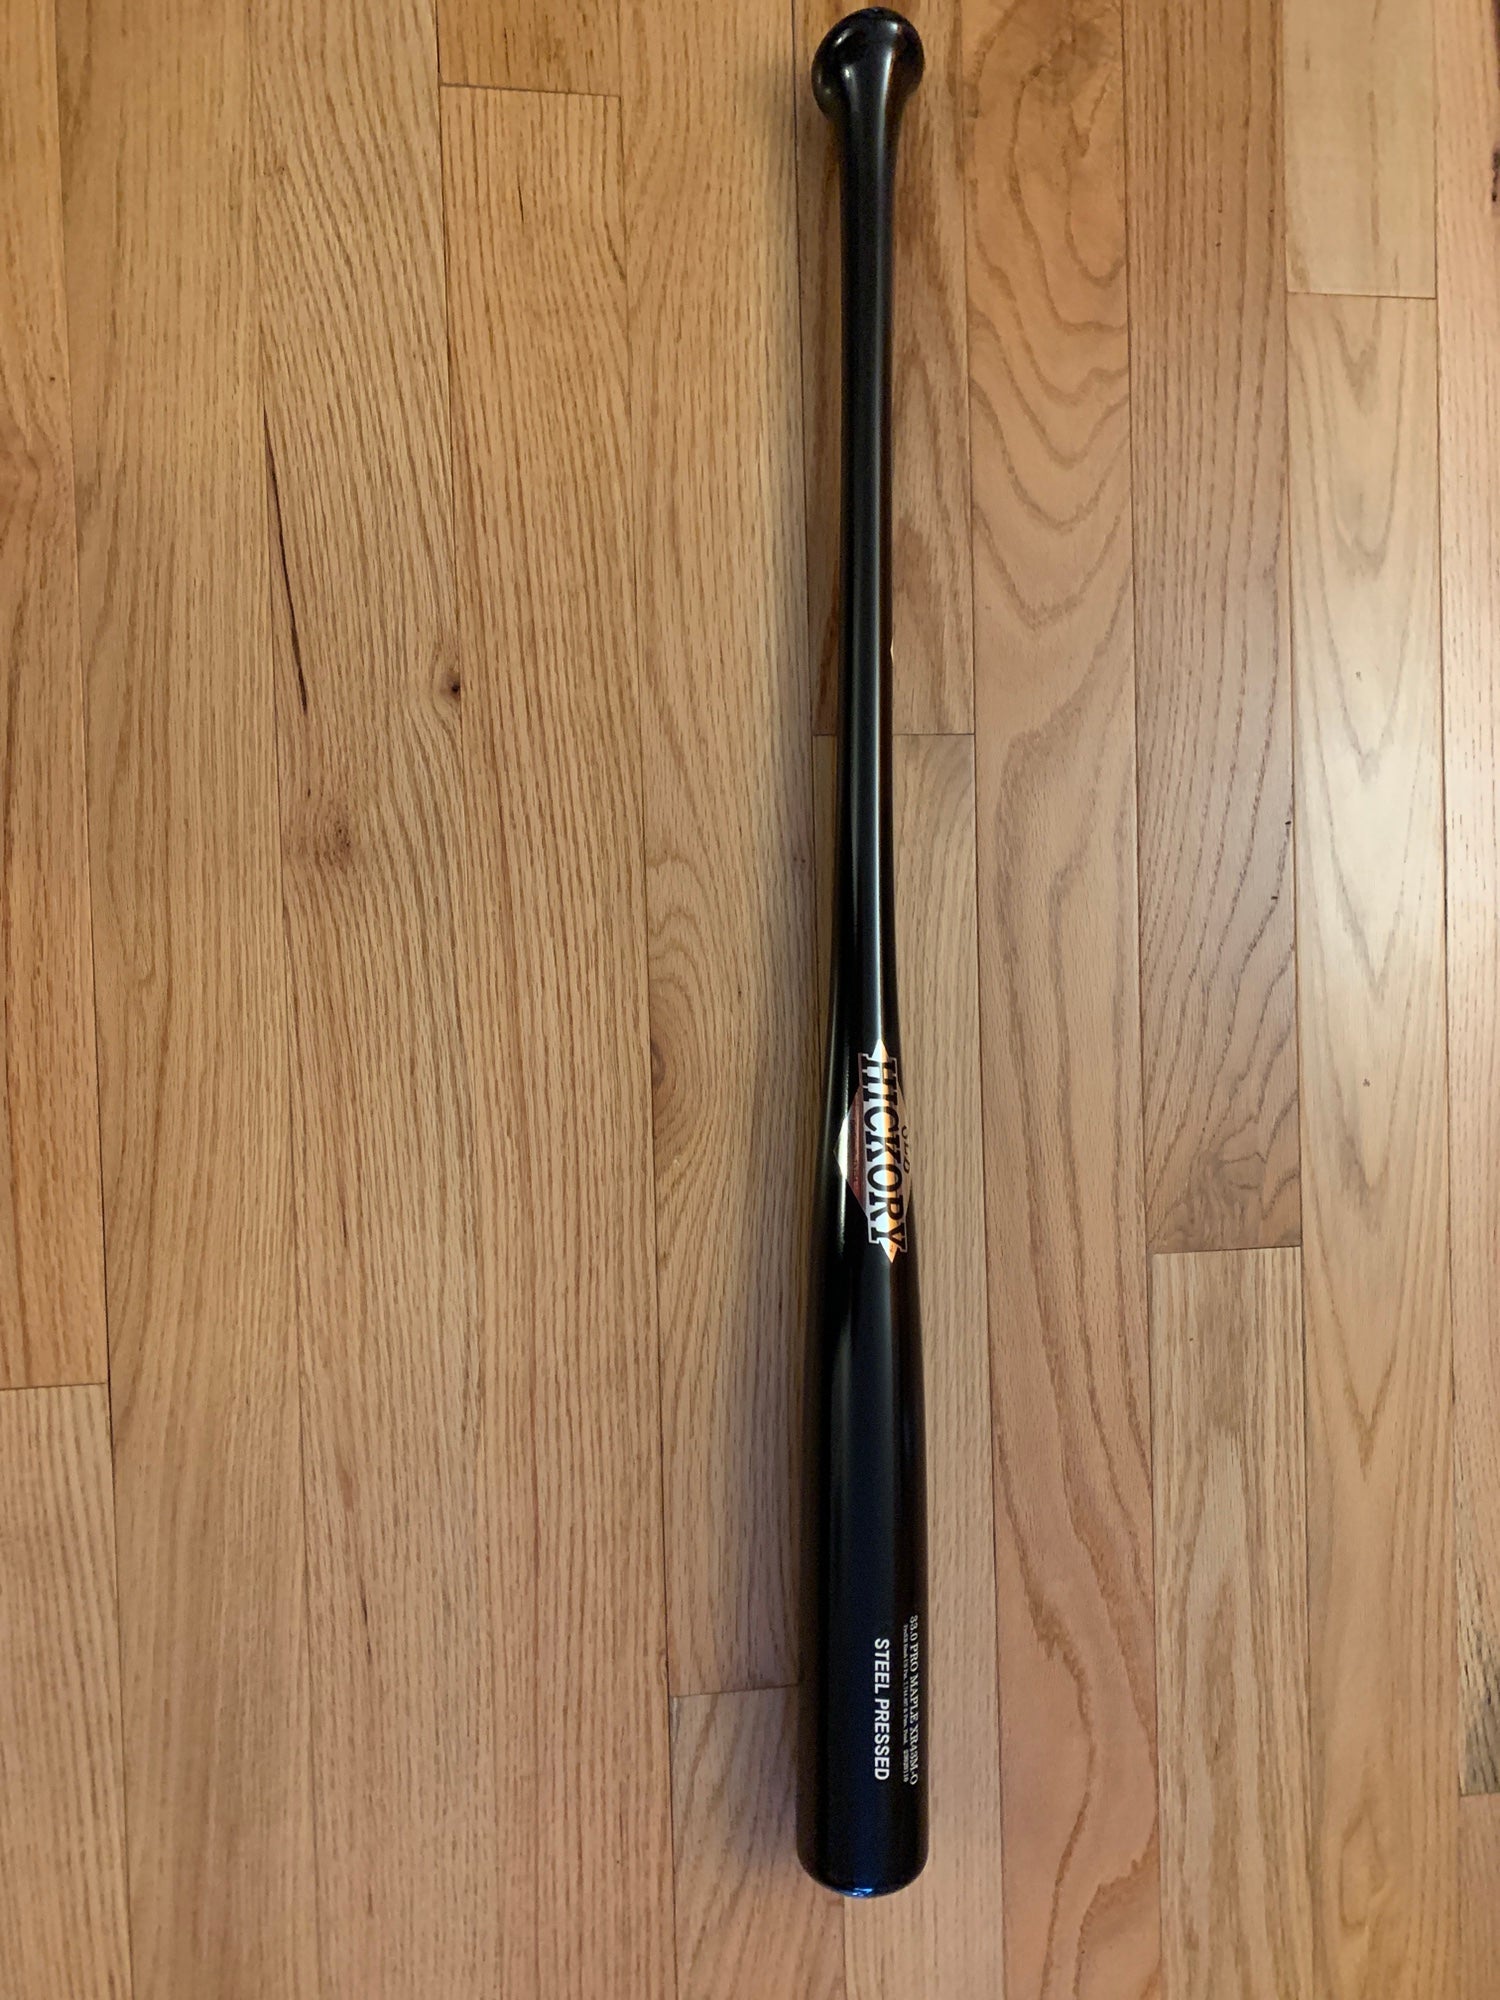 Old Hickory Steel Pressed Matt Olson Wood Bat, Better Baseball